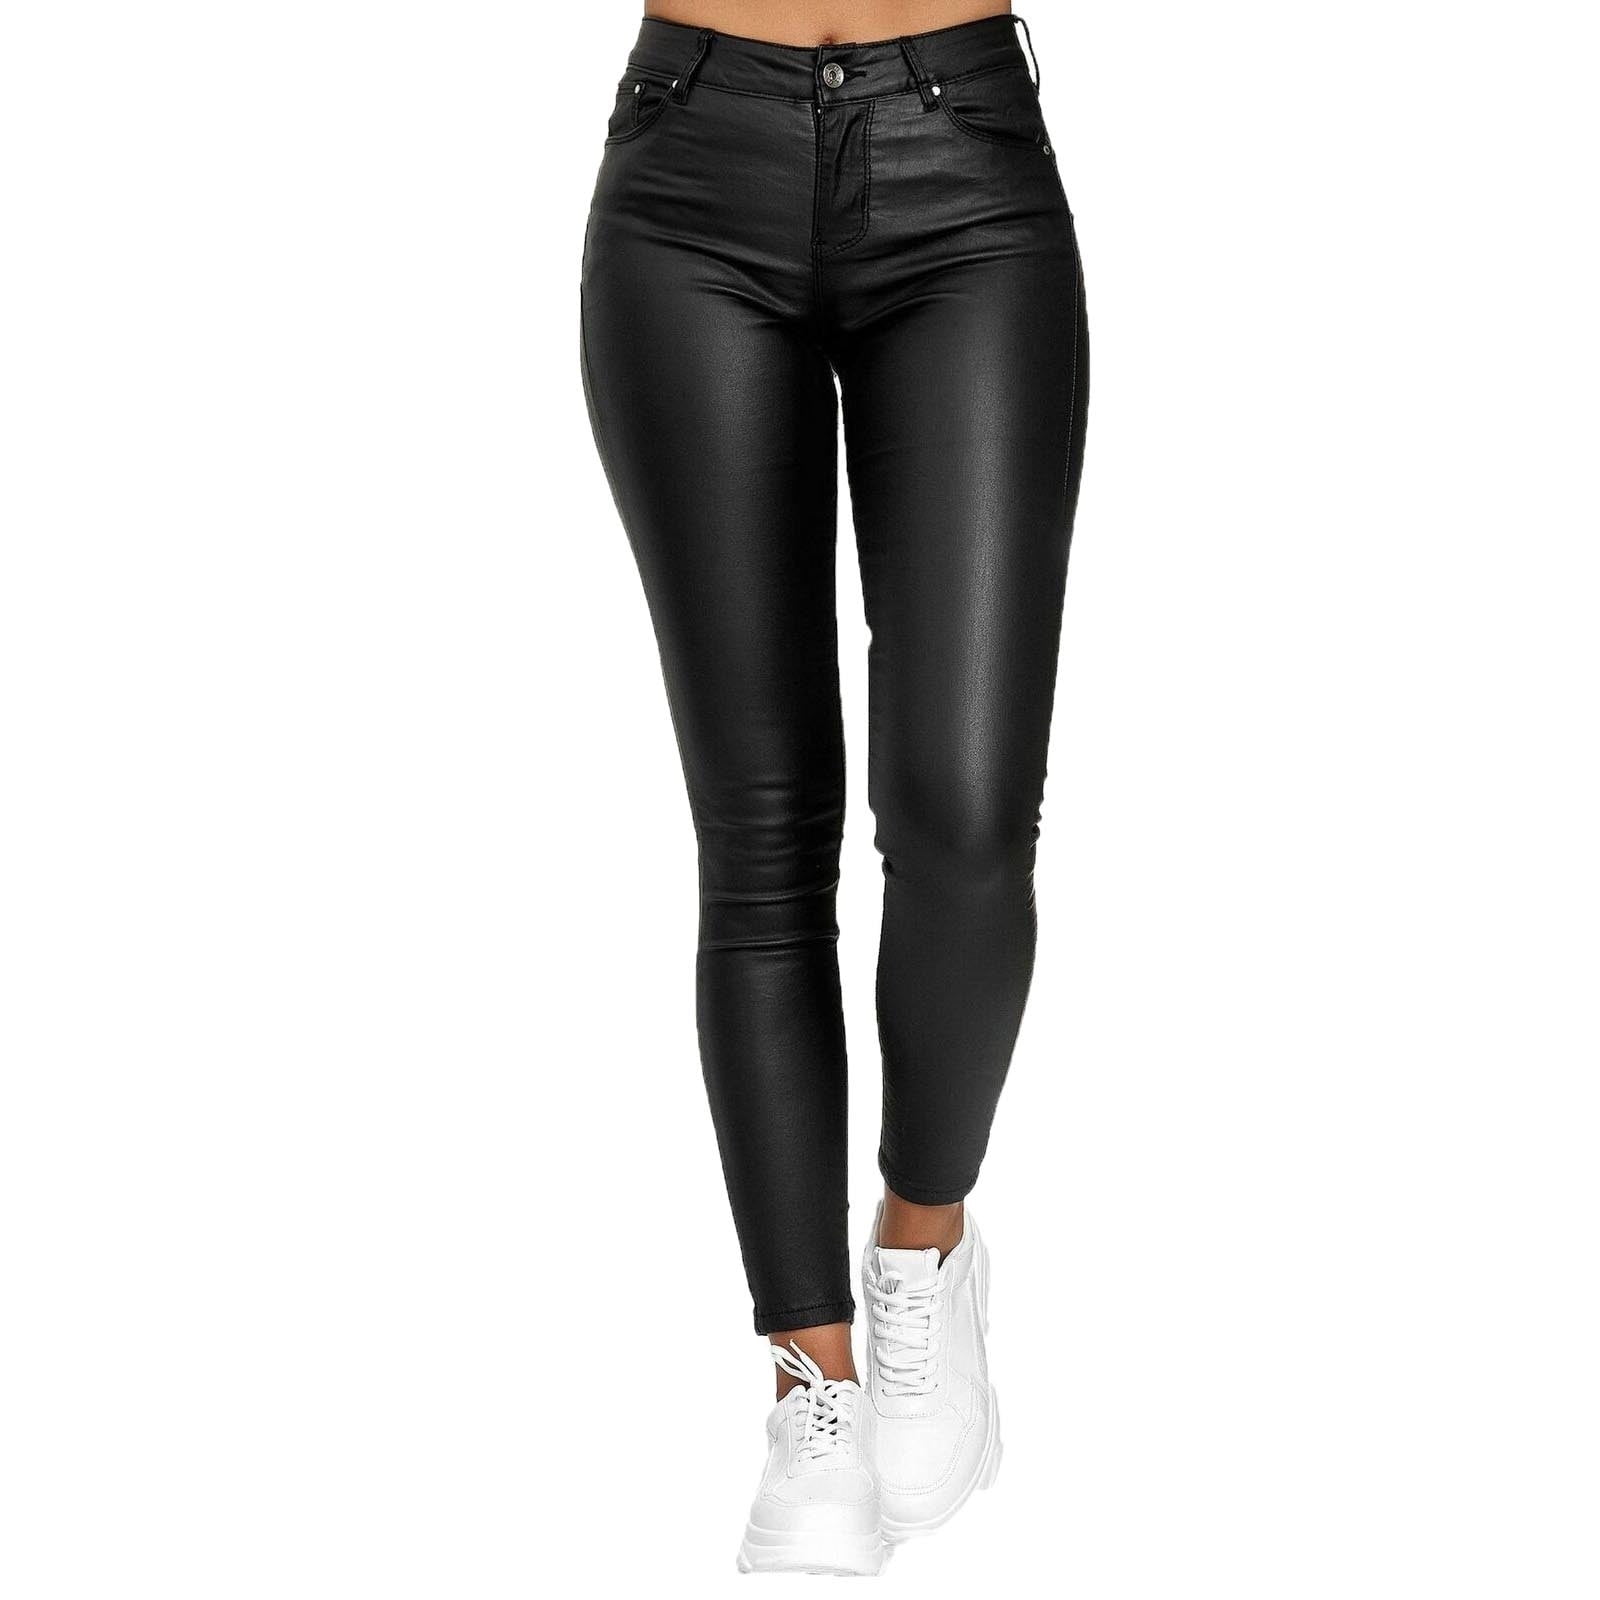 Leather Black Pants Leggings High Waist Women Sexy Elastic Skinny